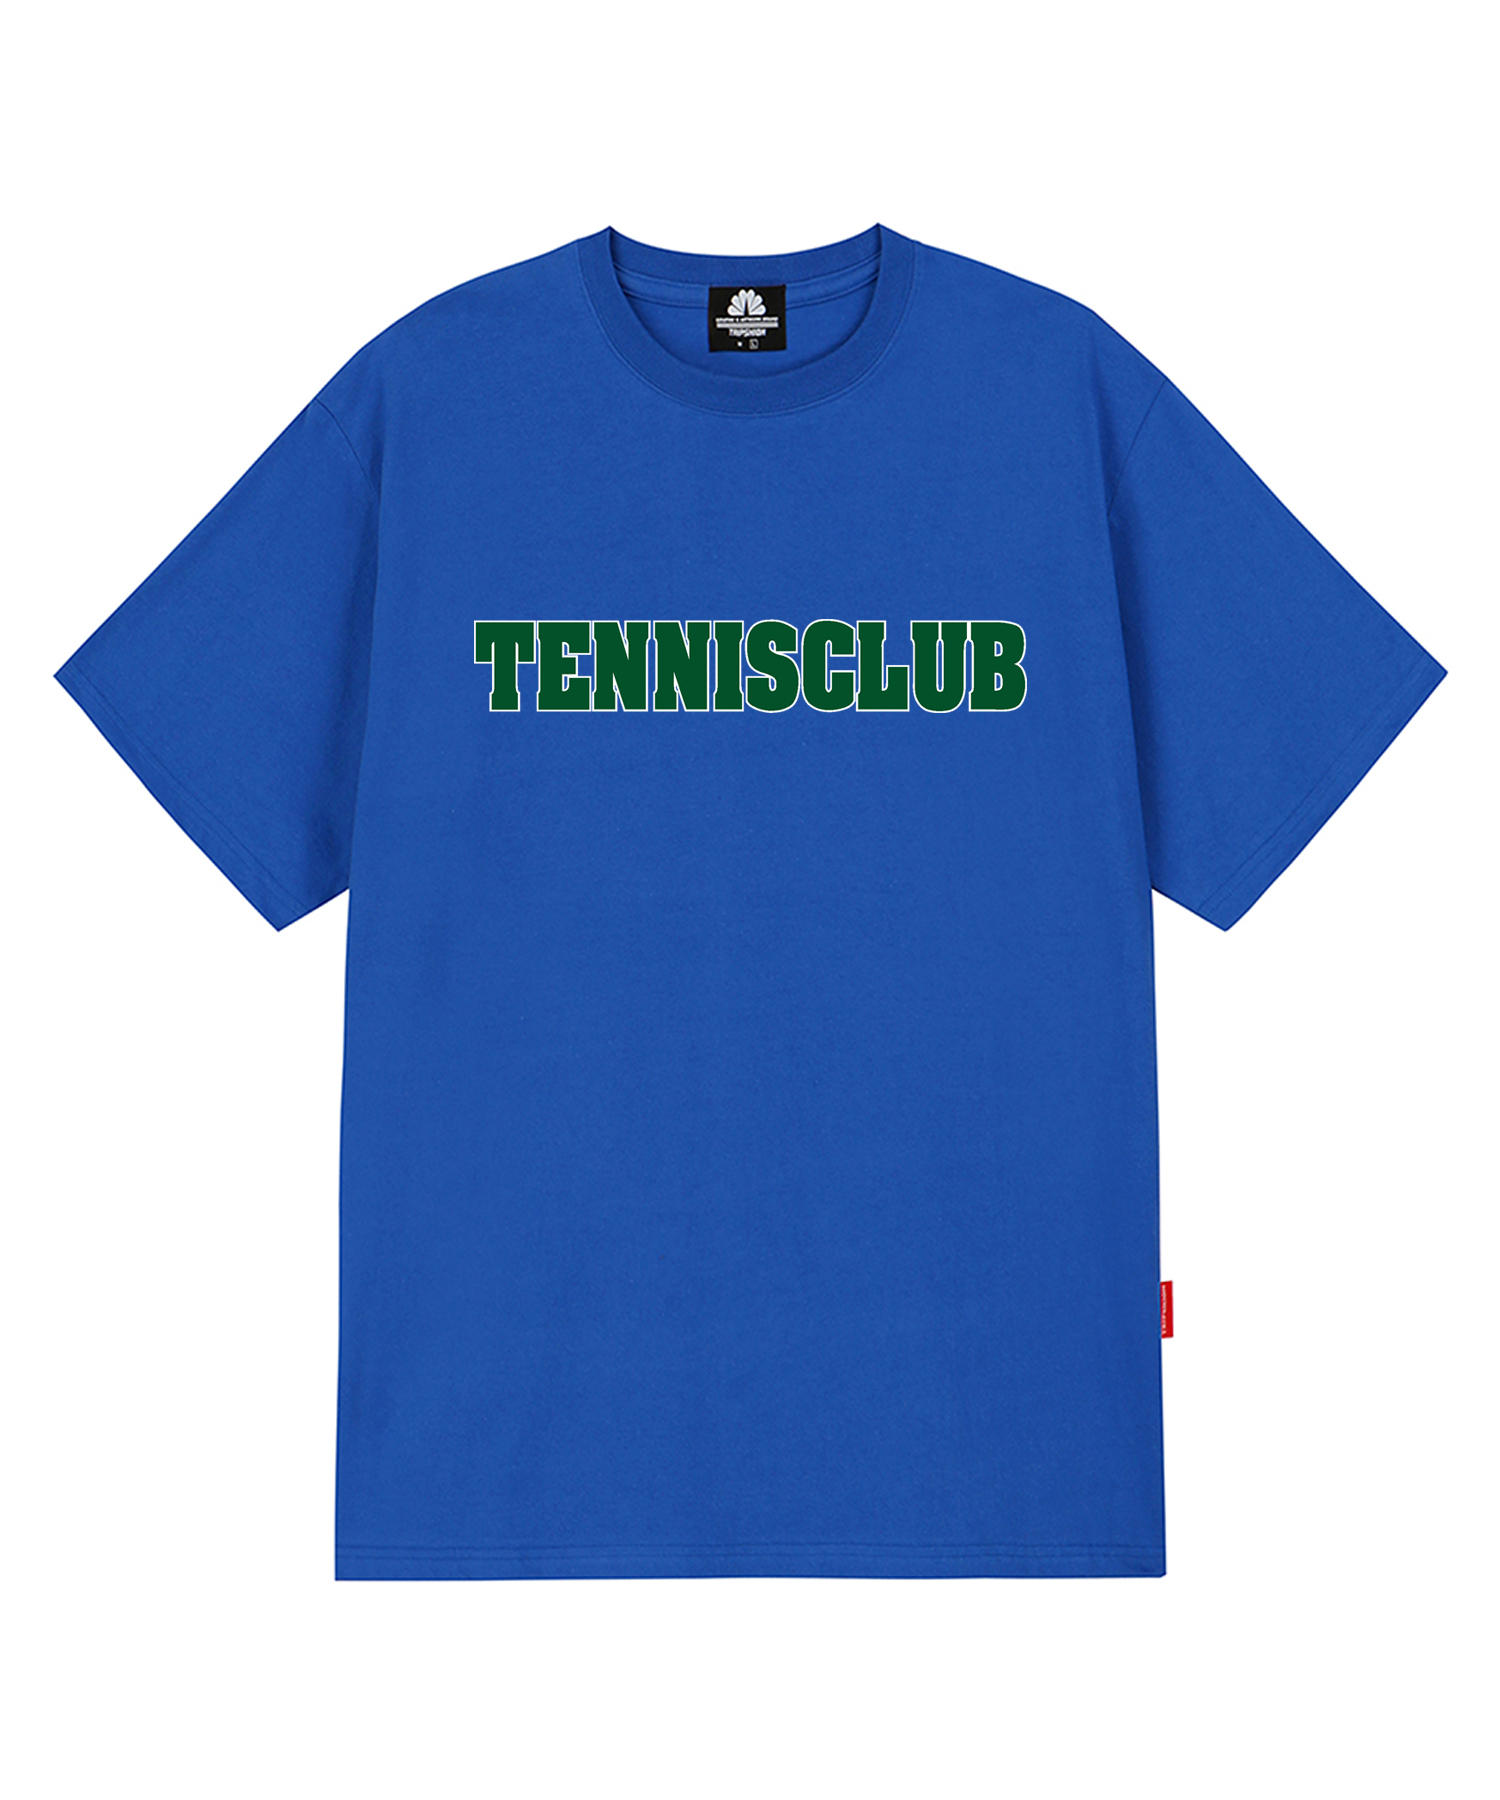 TENNIS CLUB T-SHIRTS - BLUE